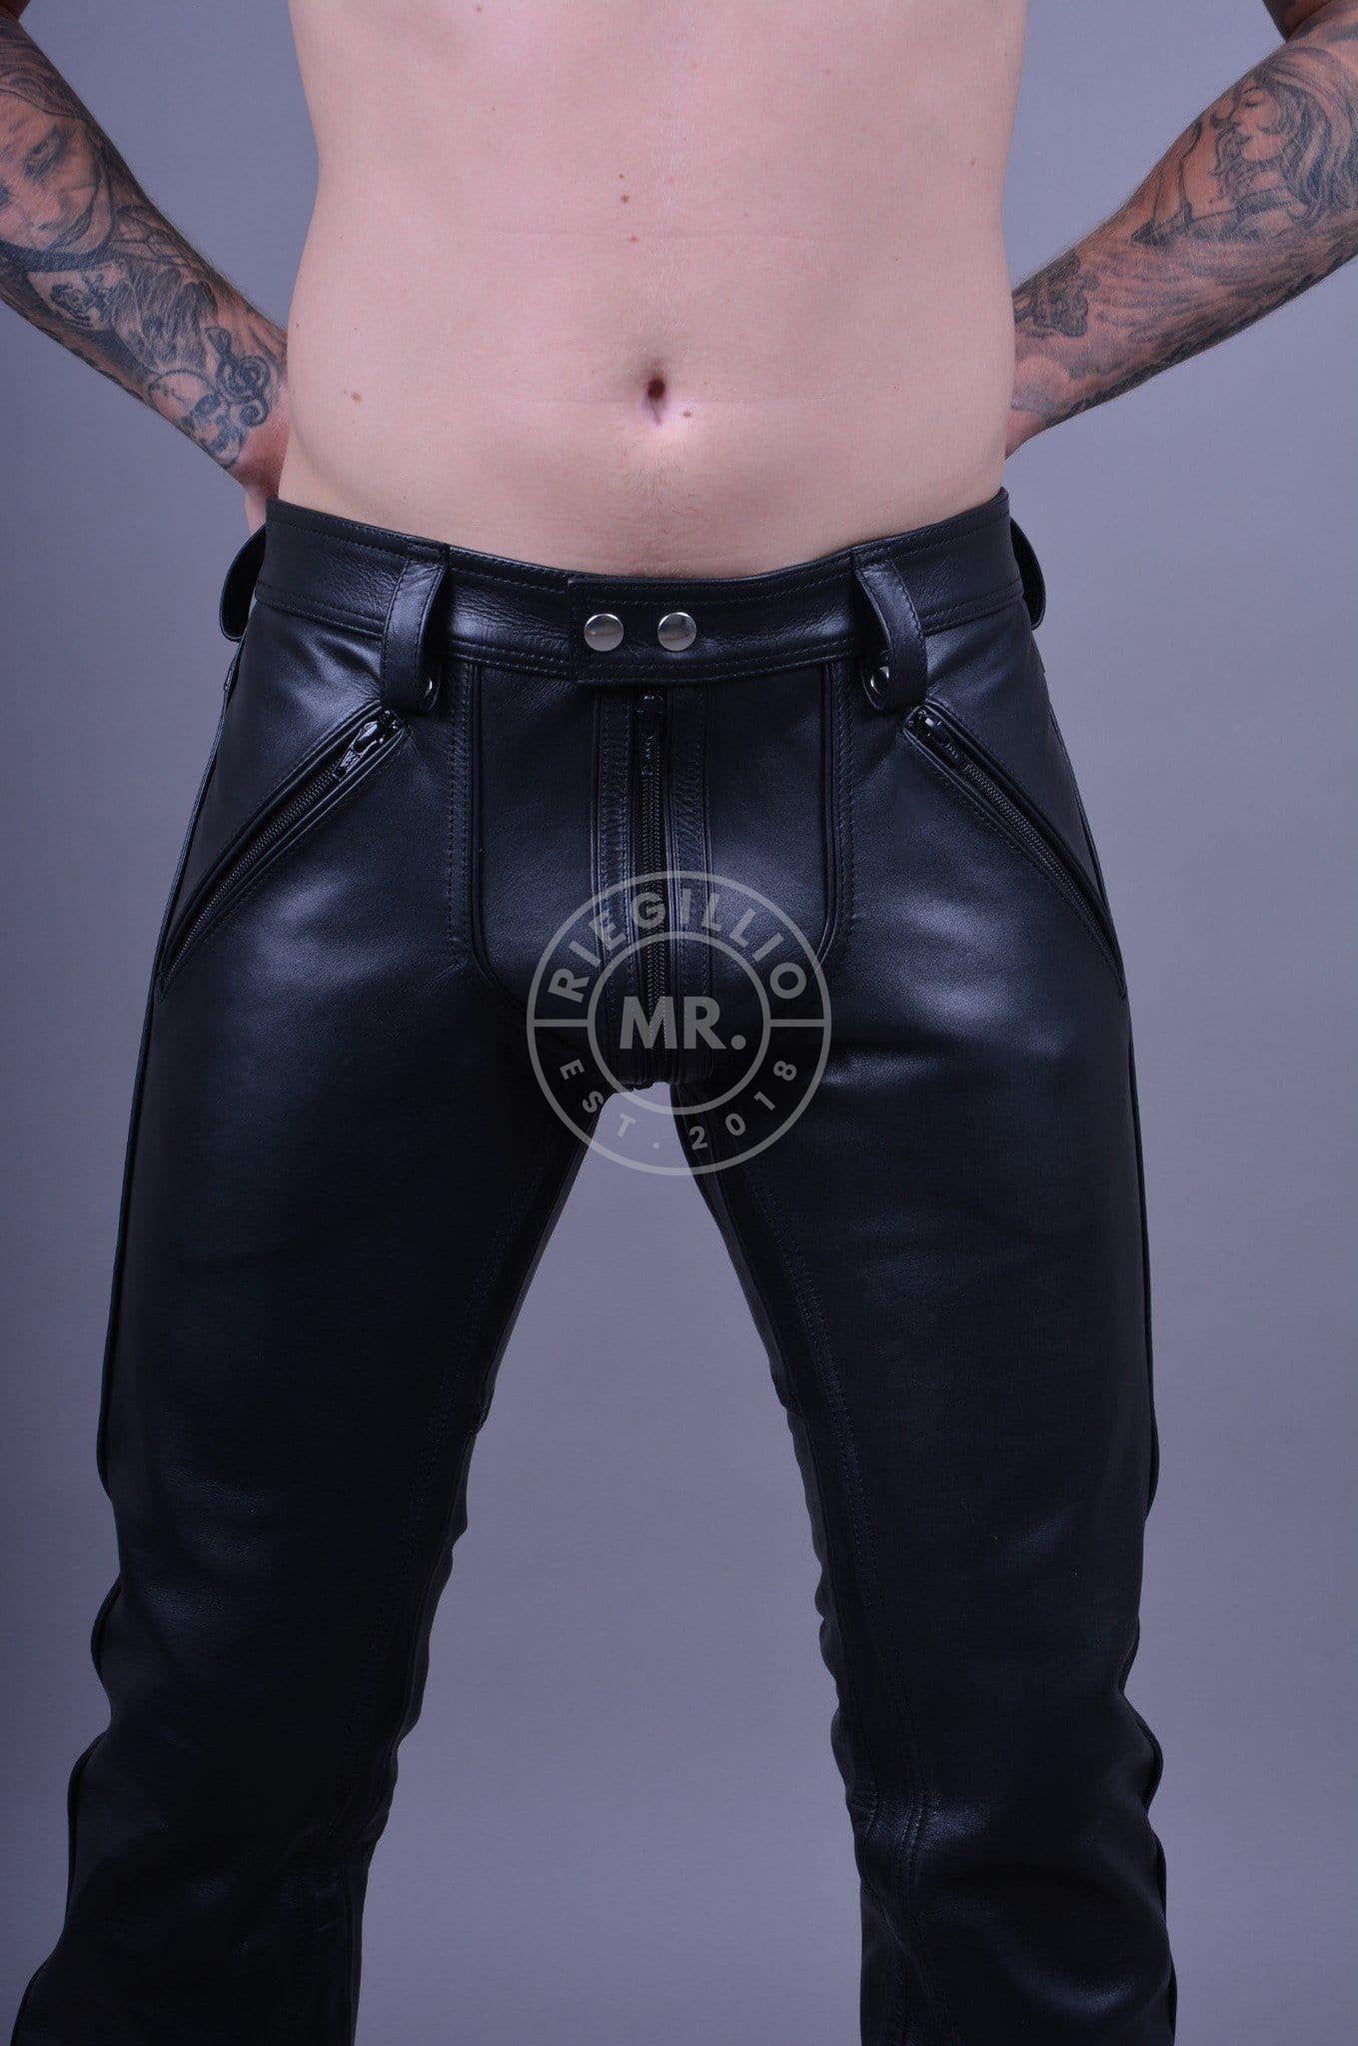 Men Glossy Patent Leather Pants Zipper Crotch Bell Bottom Pants